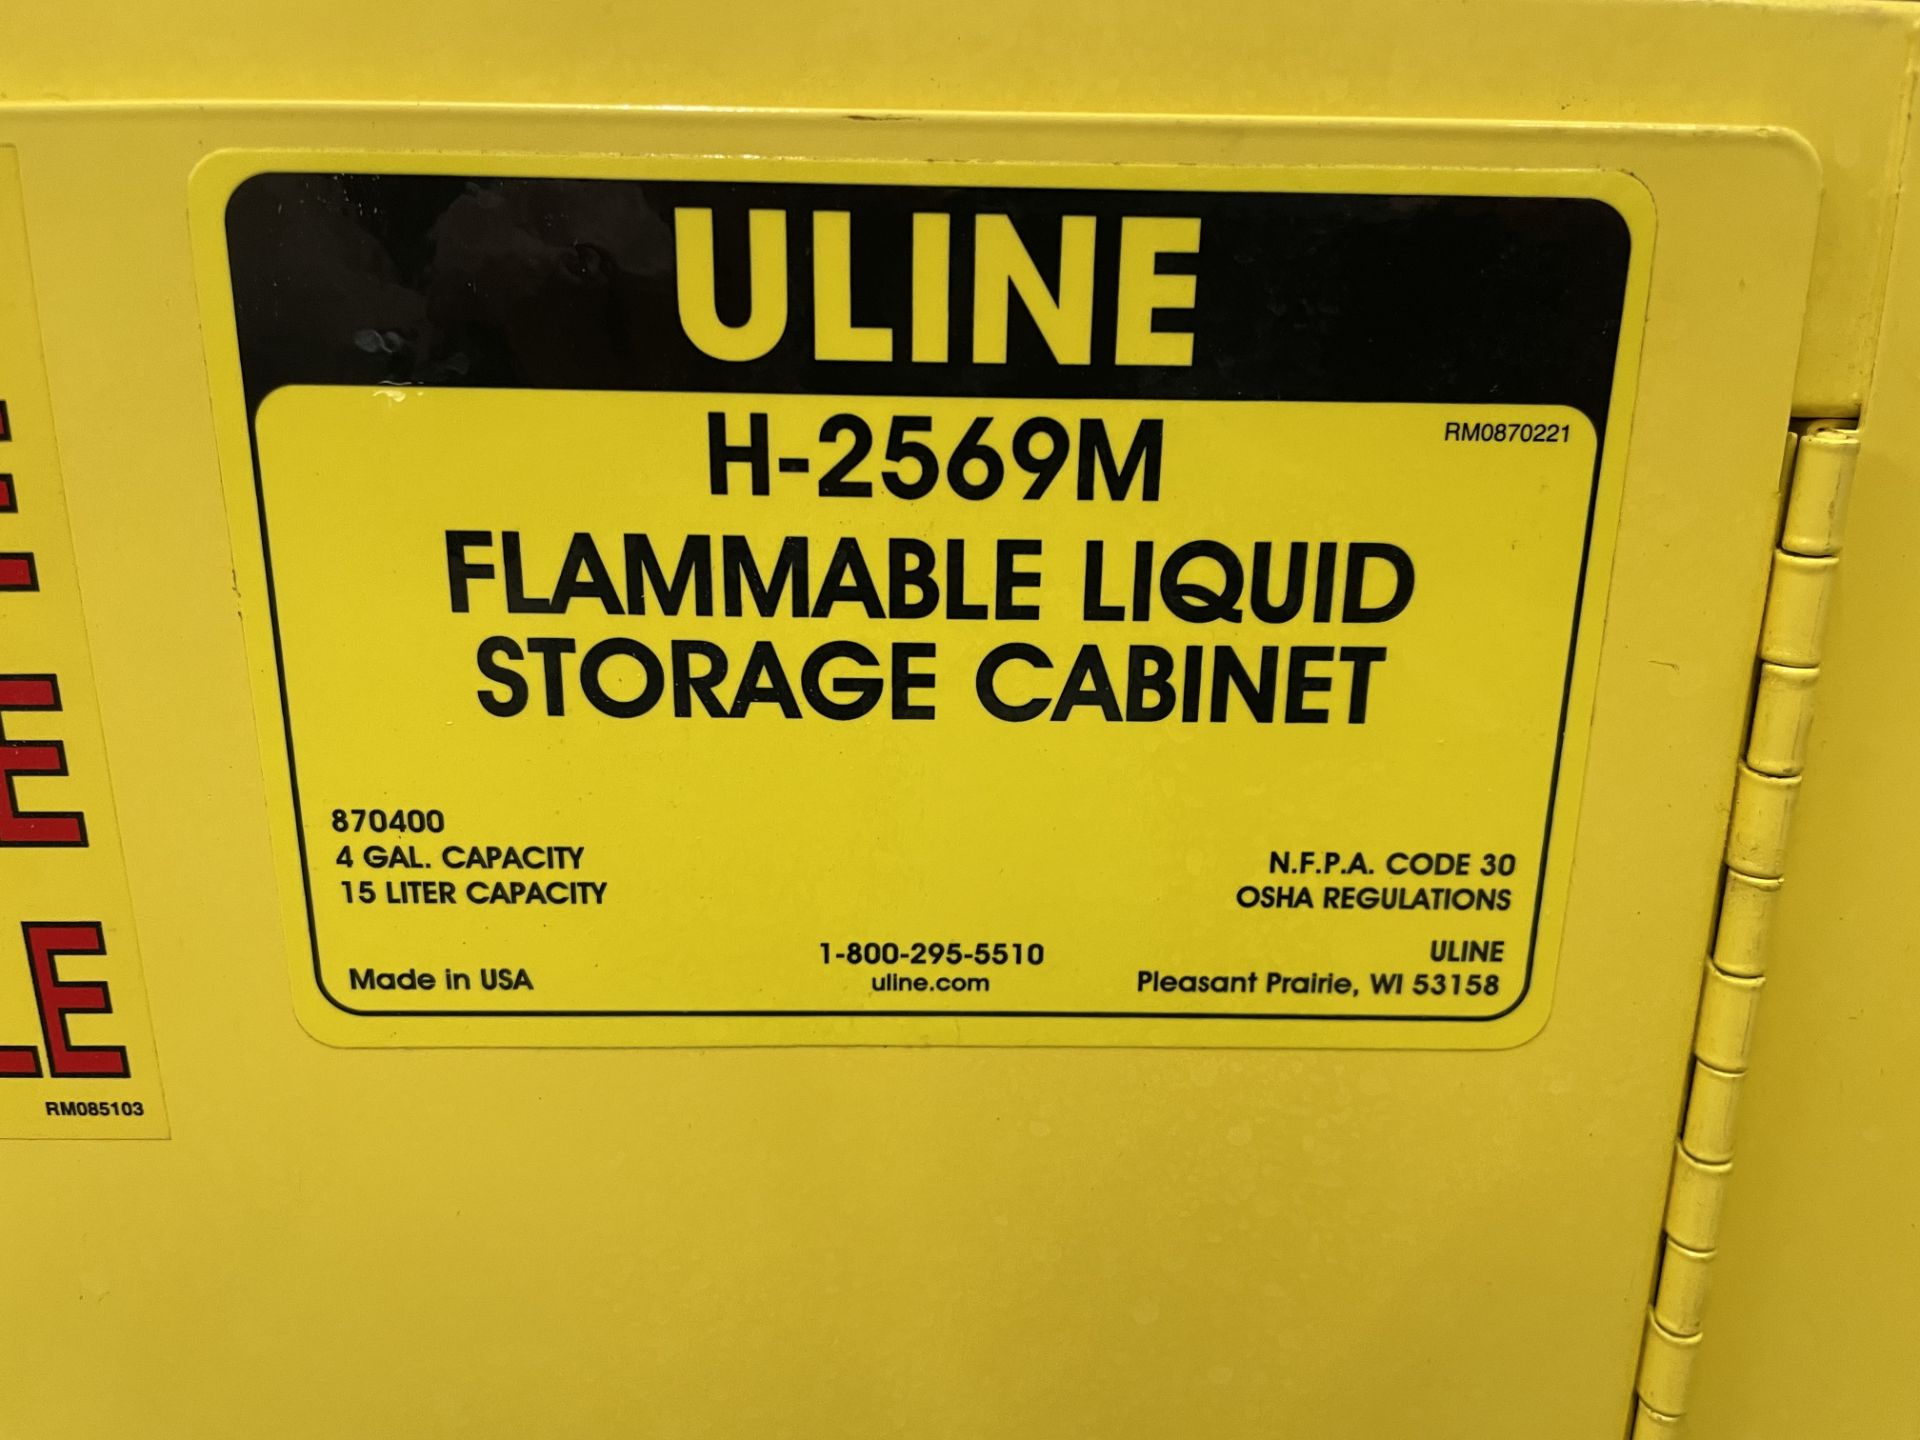 Uline Model H-2569M Countertop Flammable Liquid Storage Cabinet, 4 Gallon/15 Liter Capacity - Image 2 of 3